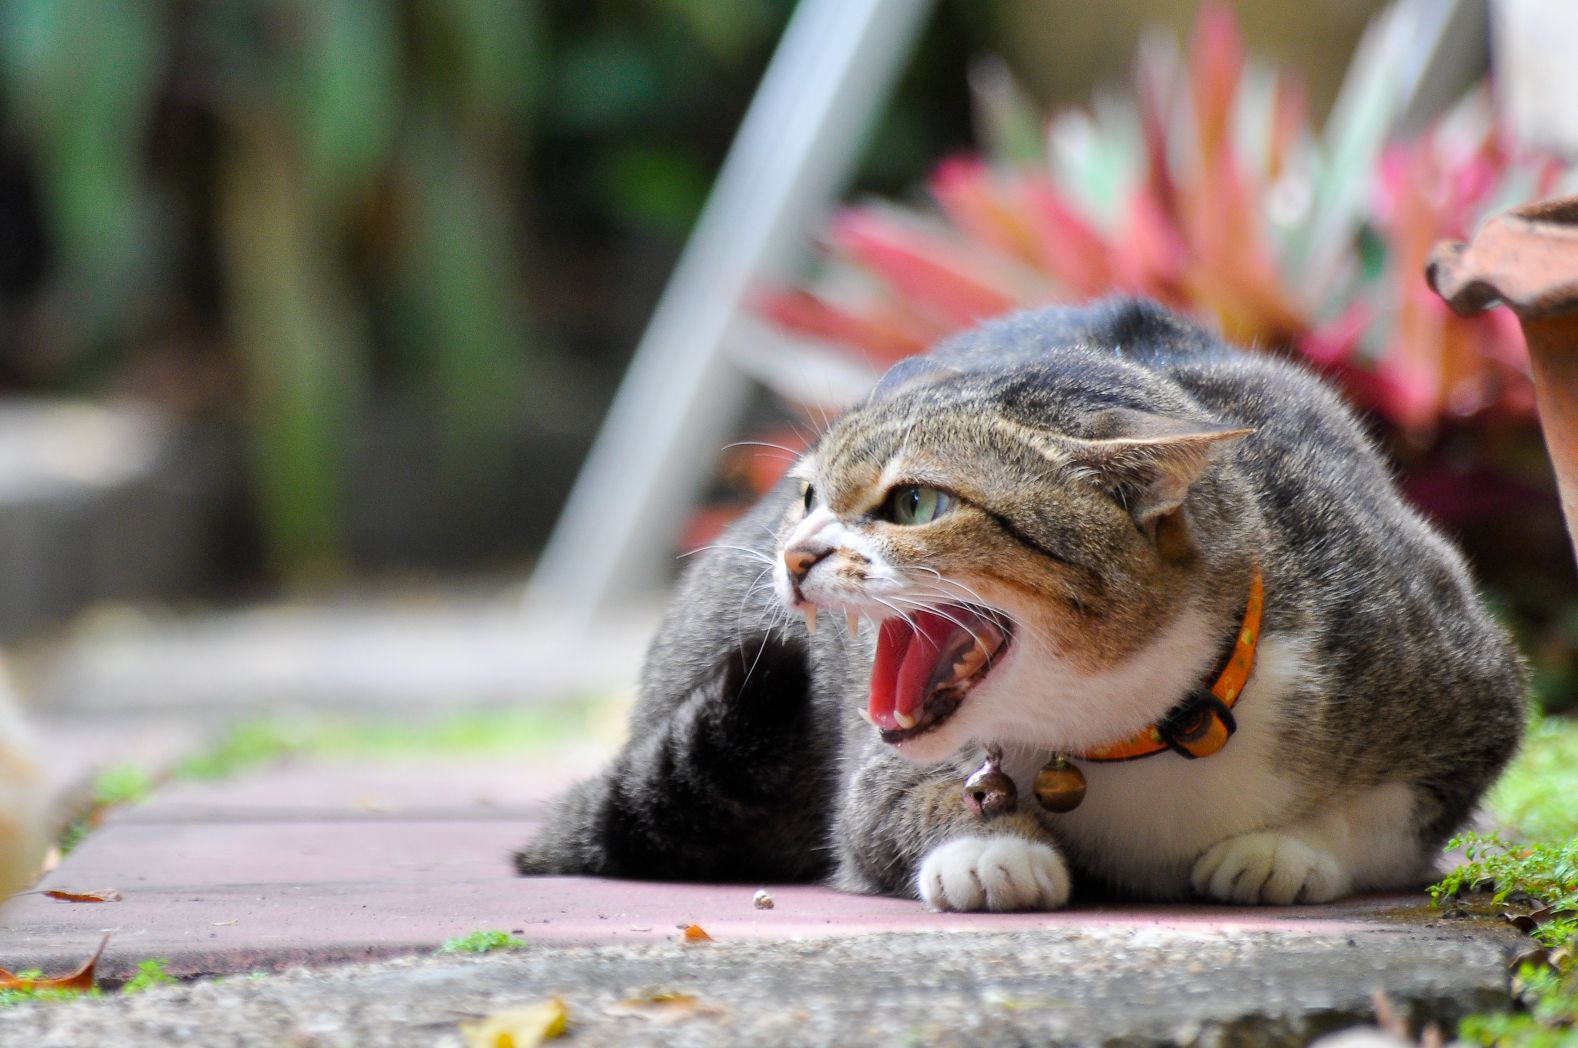 An aggressive tabby cat growling.